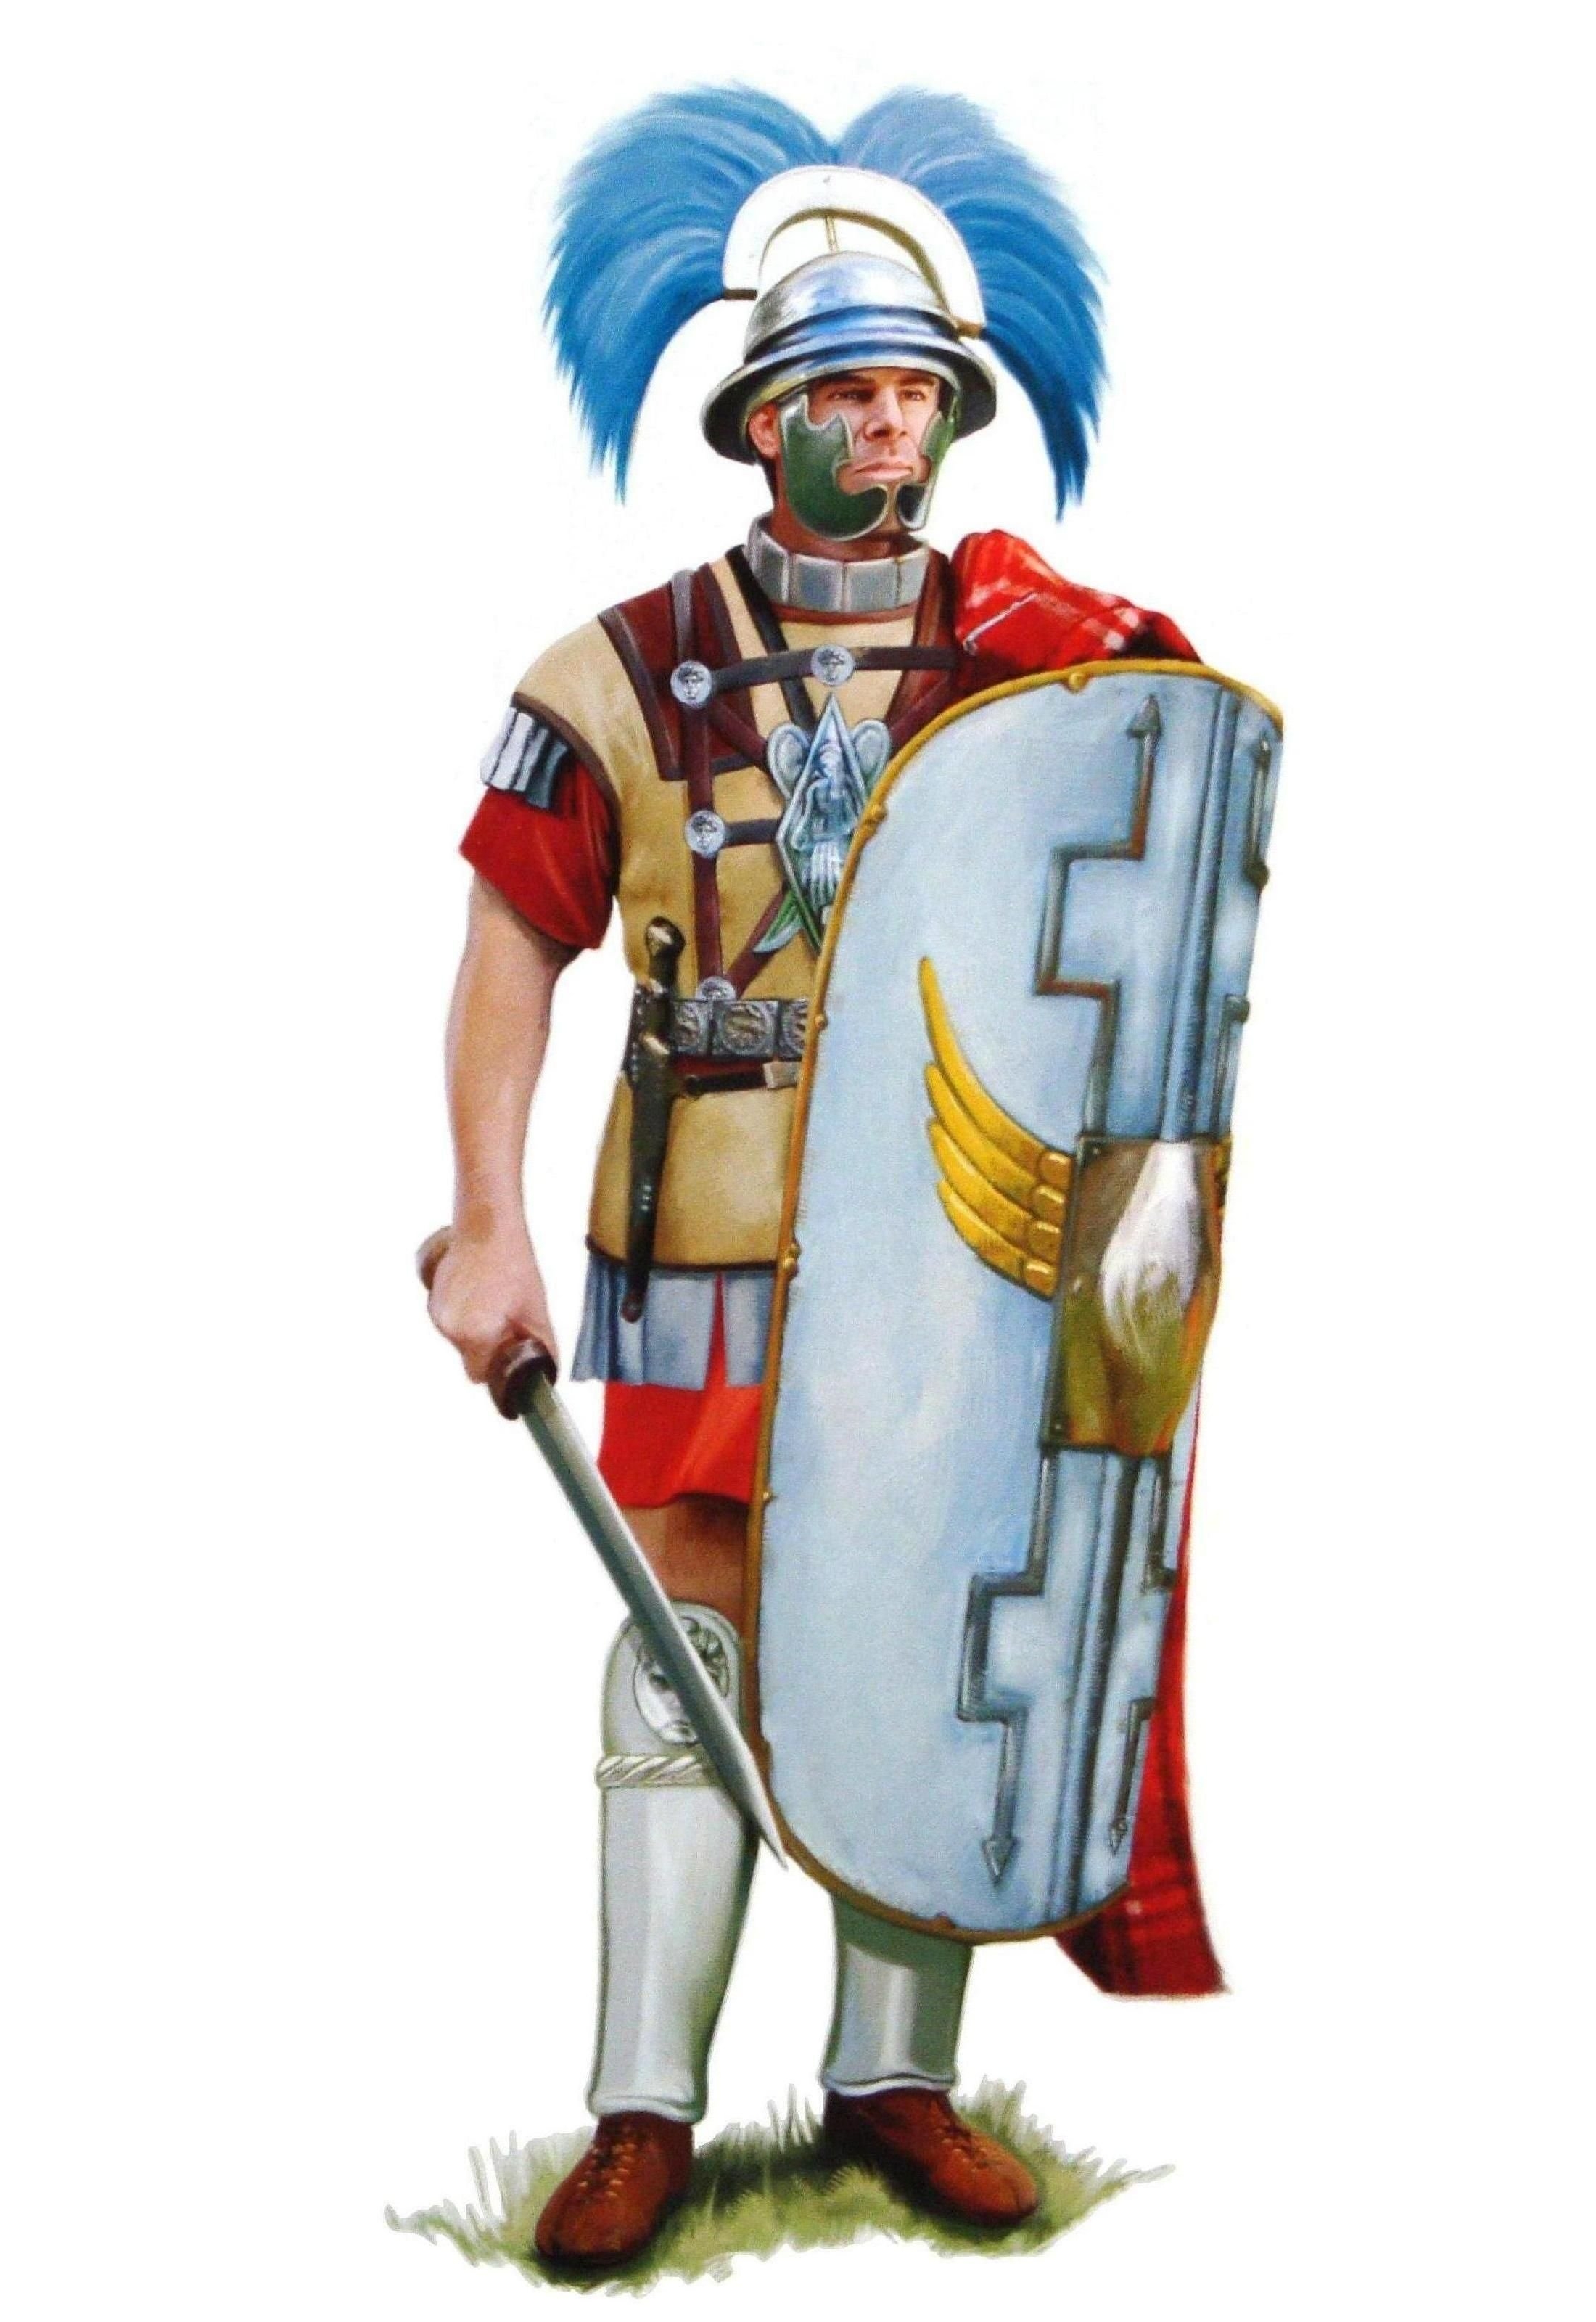 Римский воин легионер. Легионер солдат Рима. Римский легионер Центурион. Римский воин Центурион.